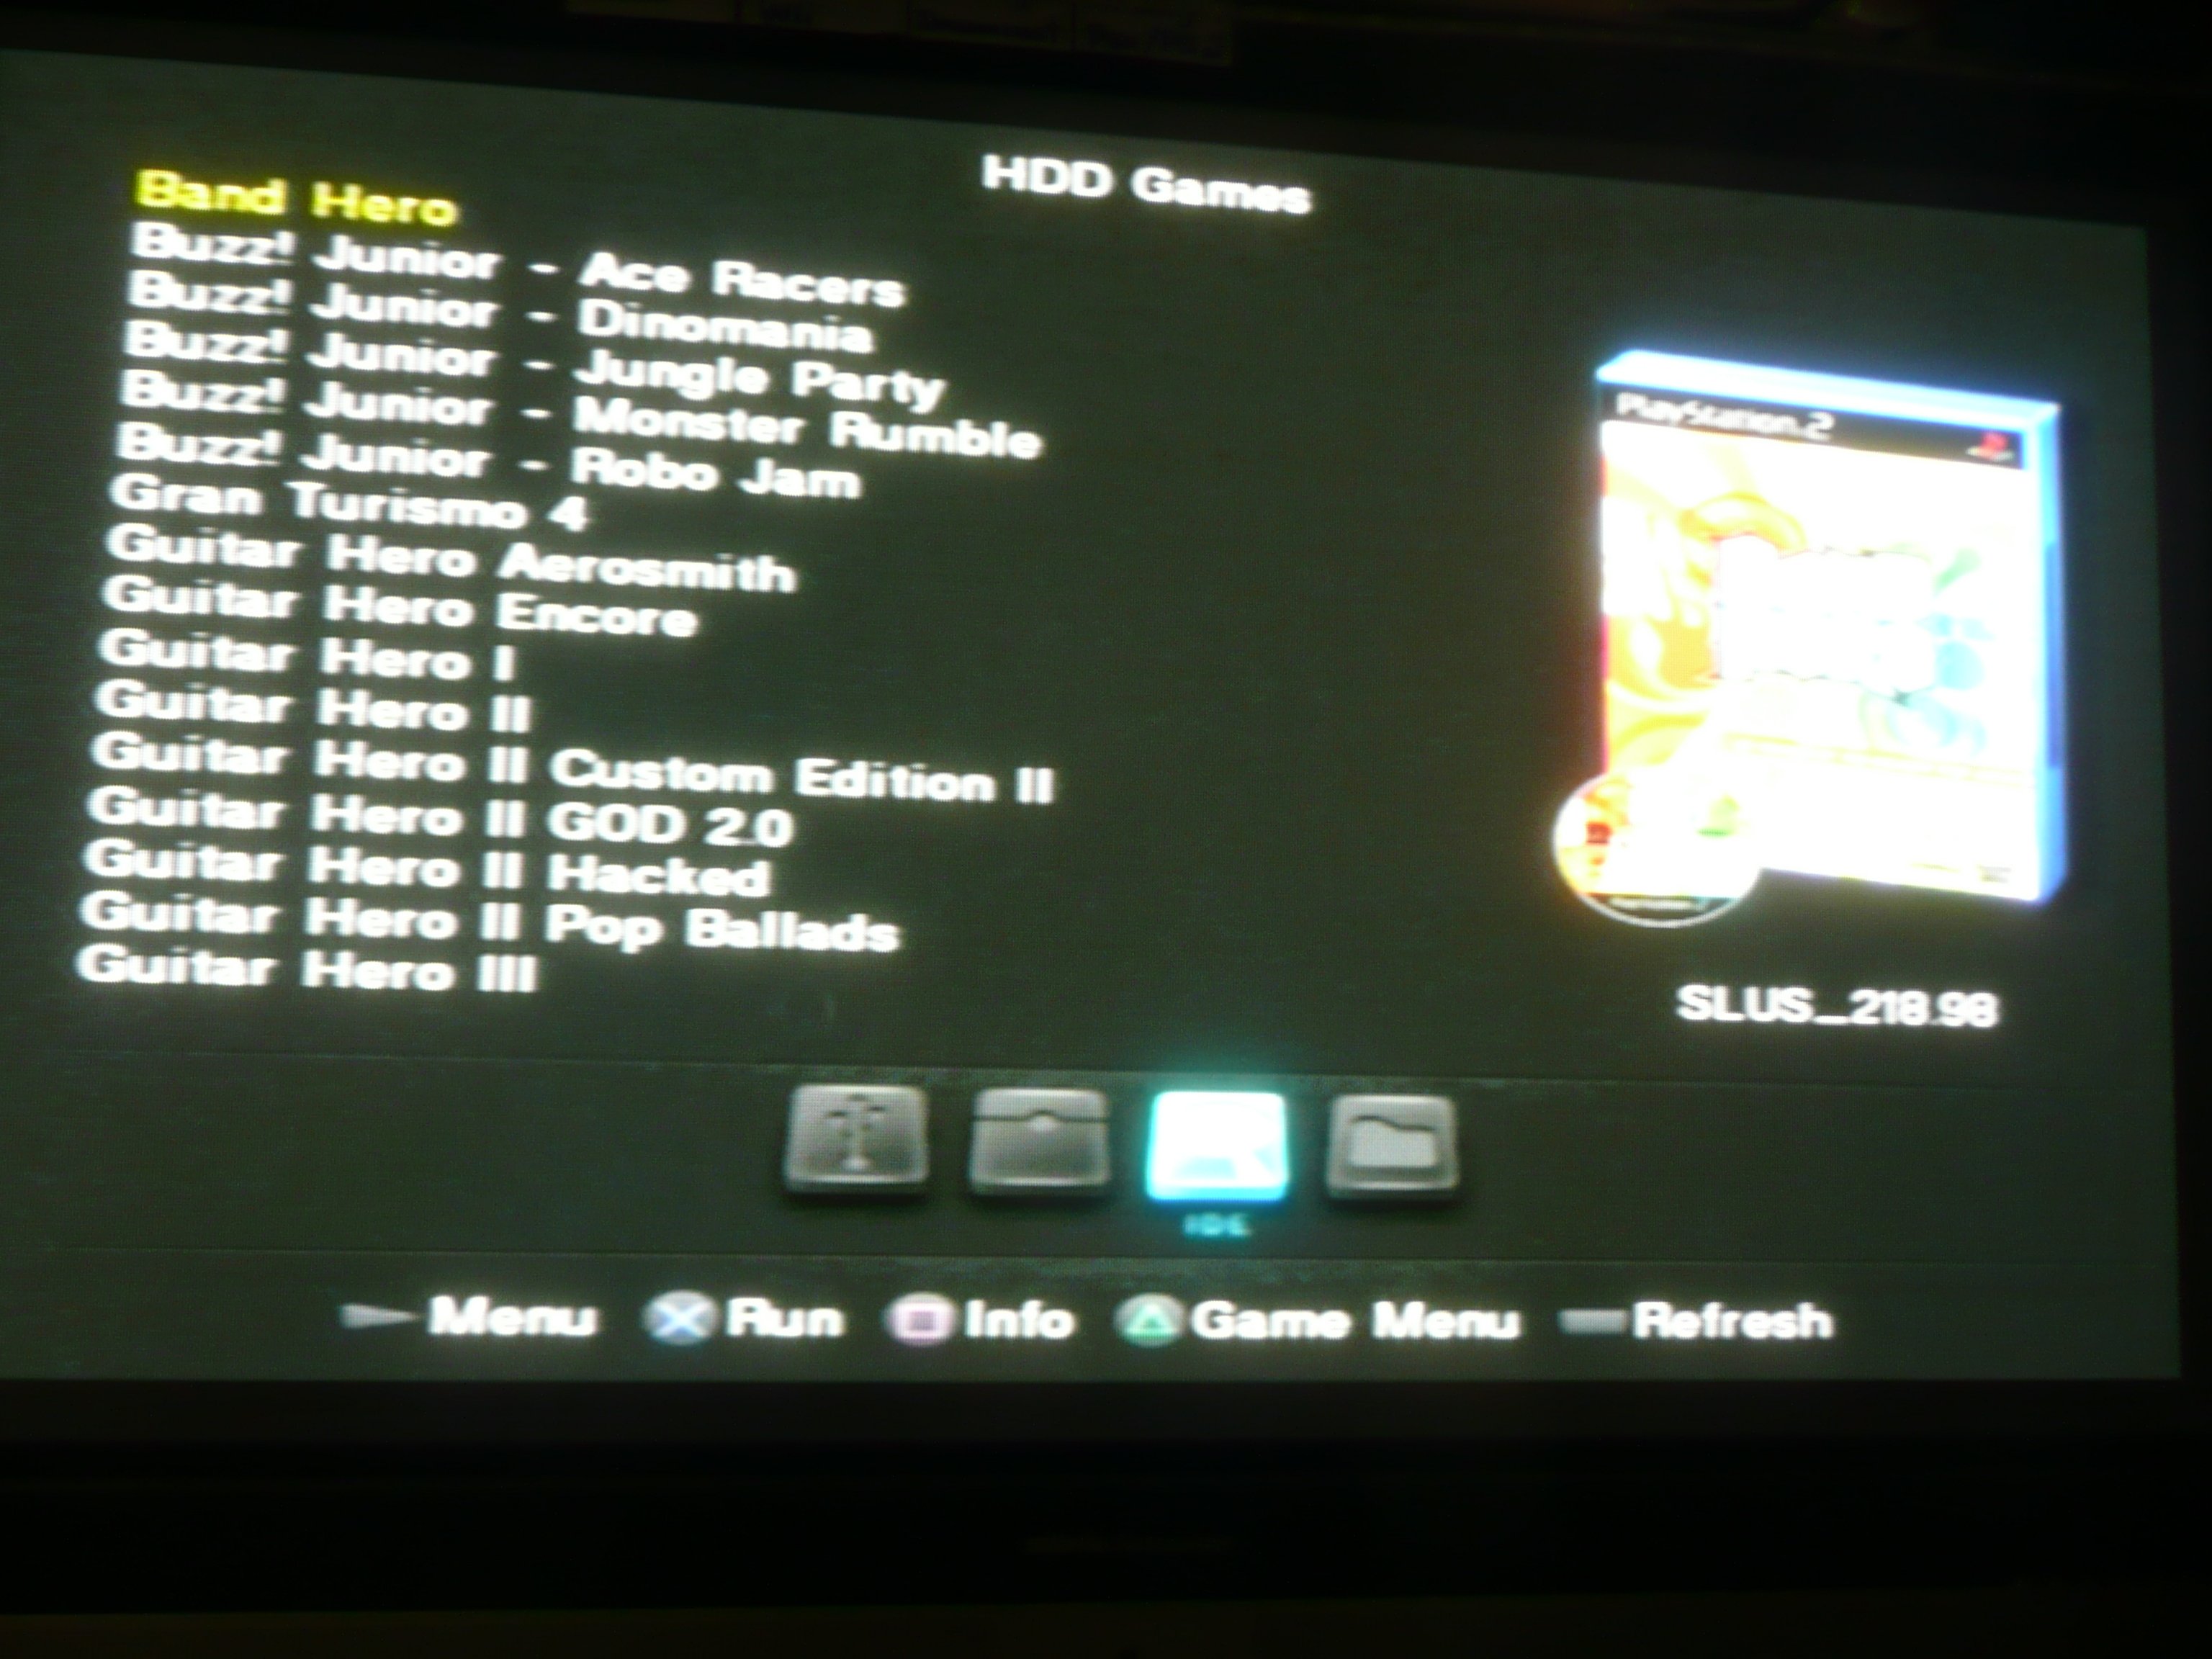 Open PS2 Loader version 1.0 released